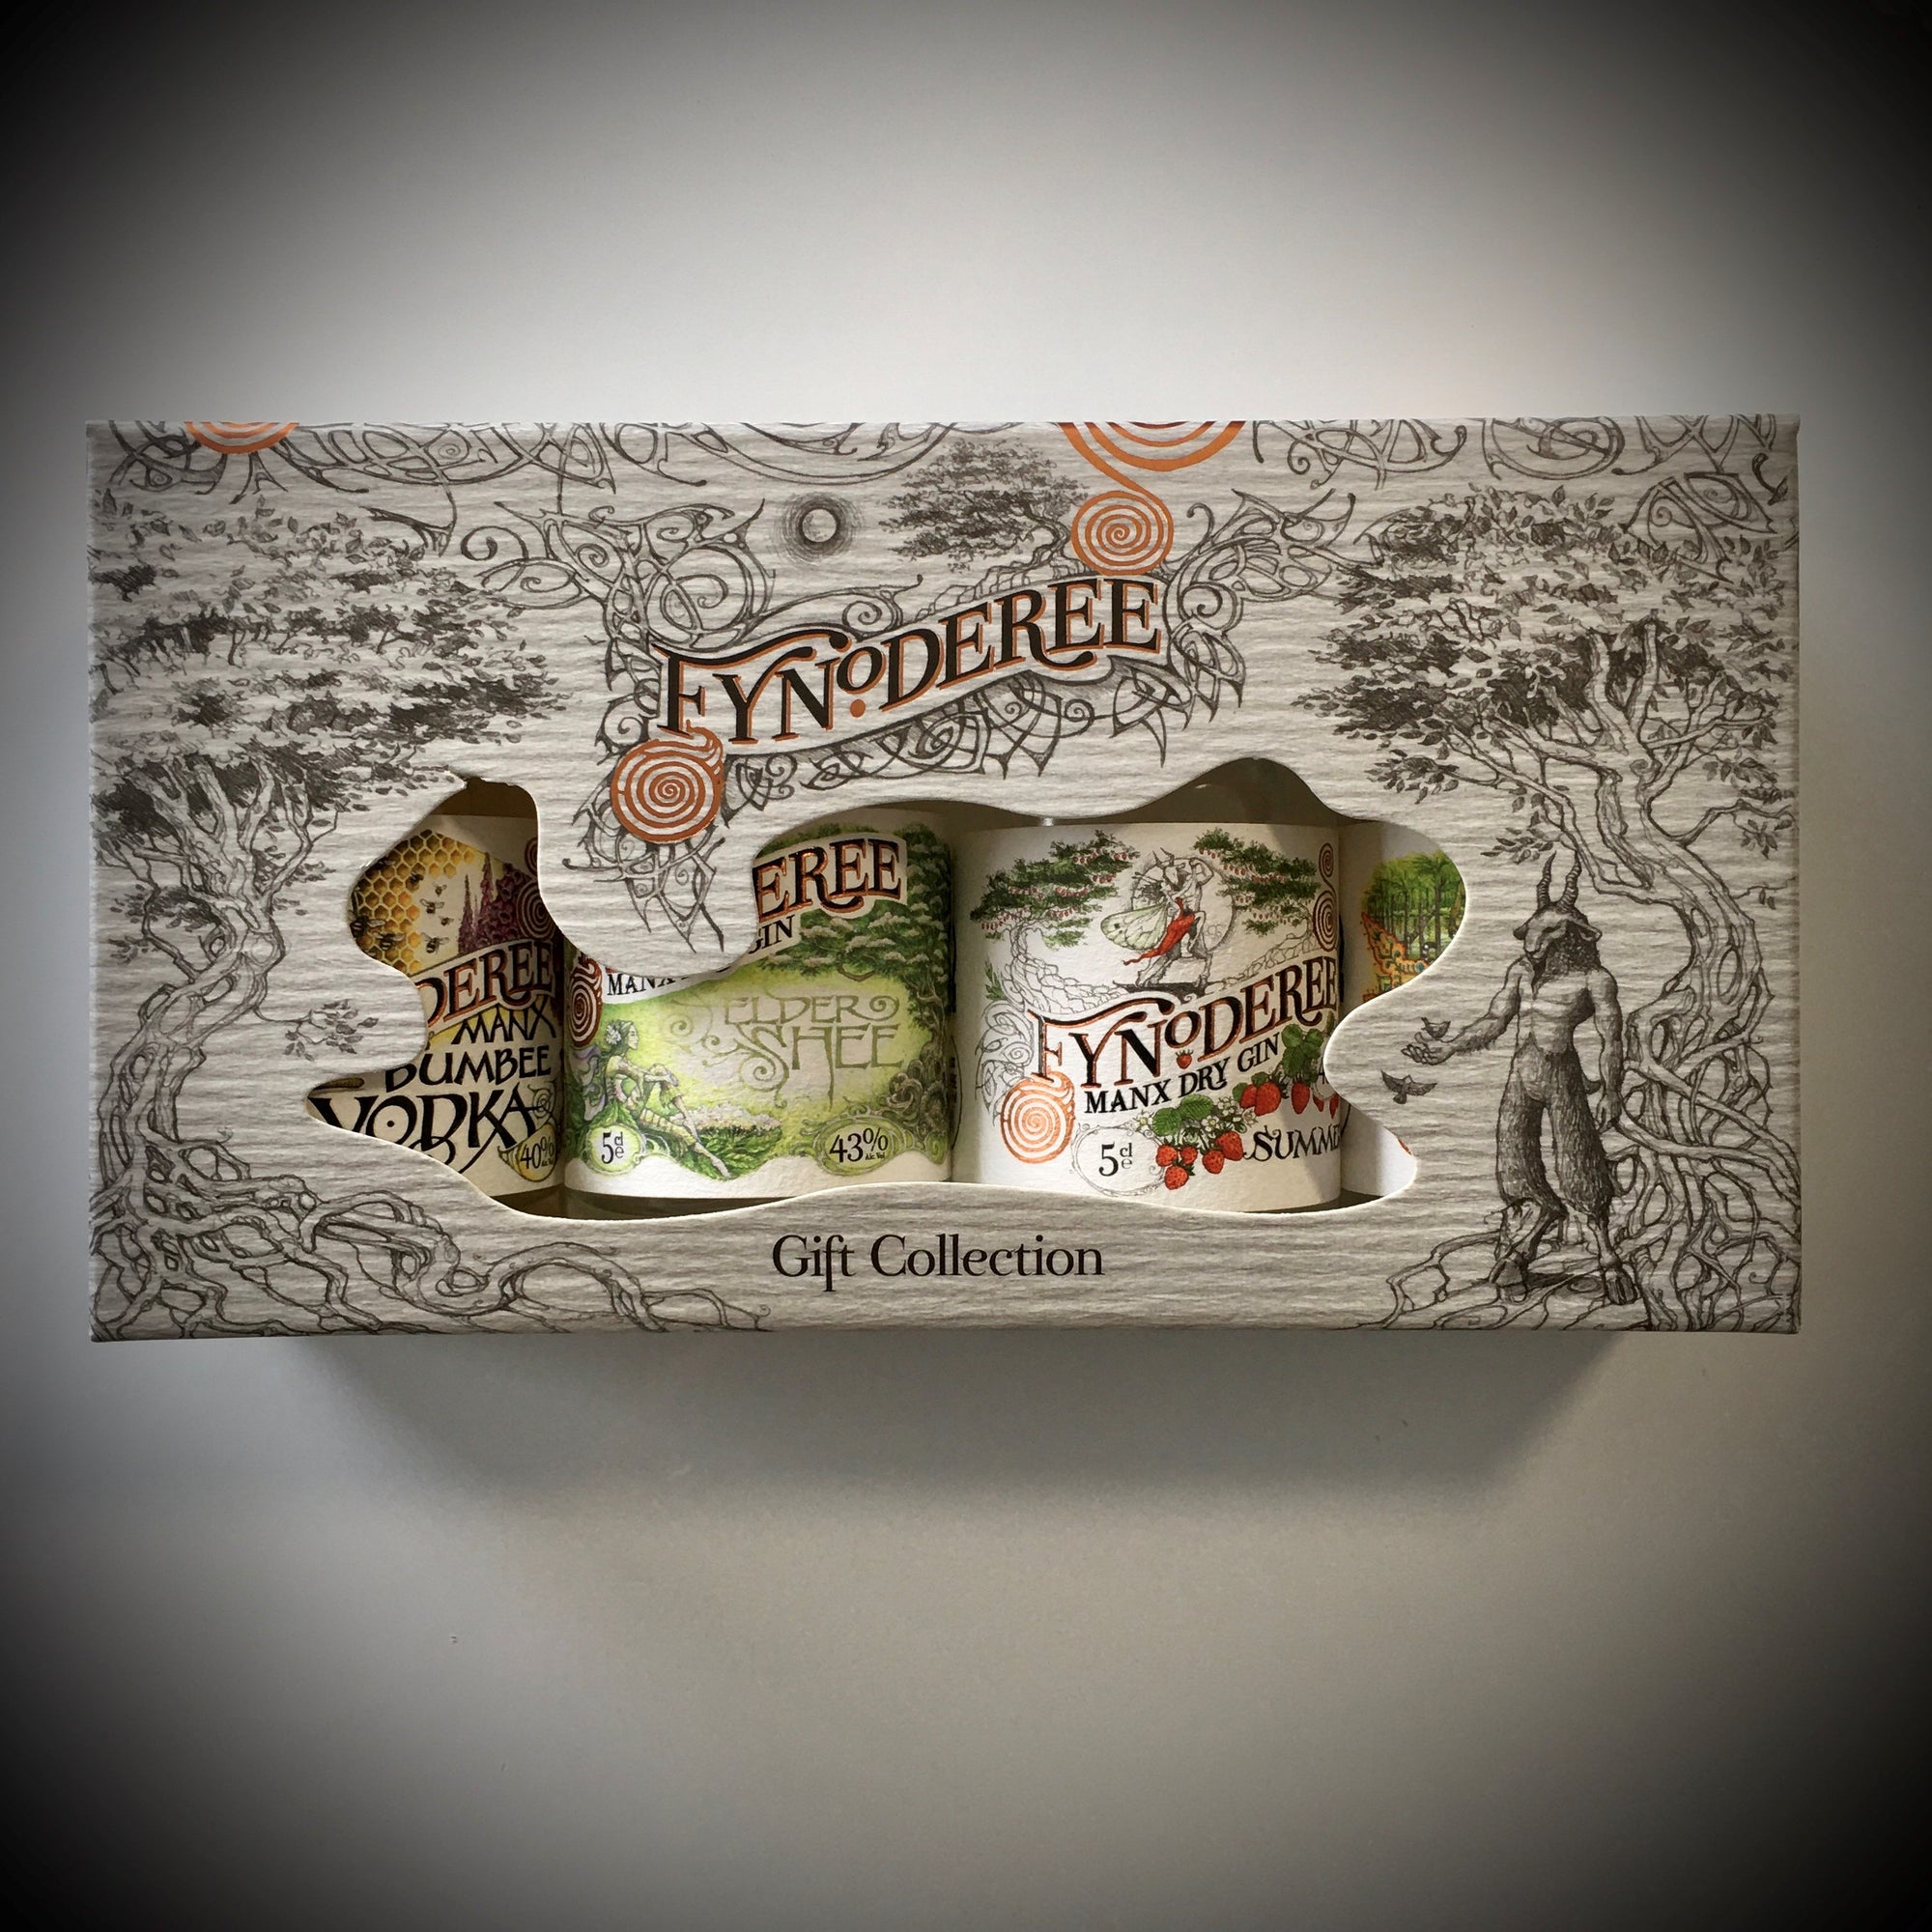 Fynoderee 'Taste of Fyn' Gift Set (4 x 5cl) - Vodka, Elder Shee, Summer & Chai